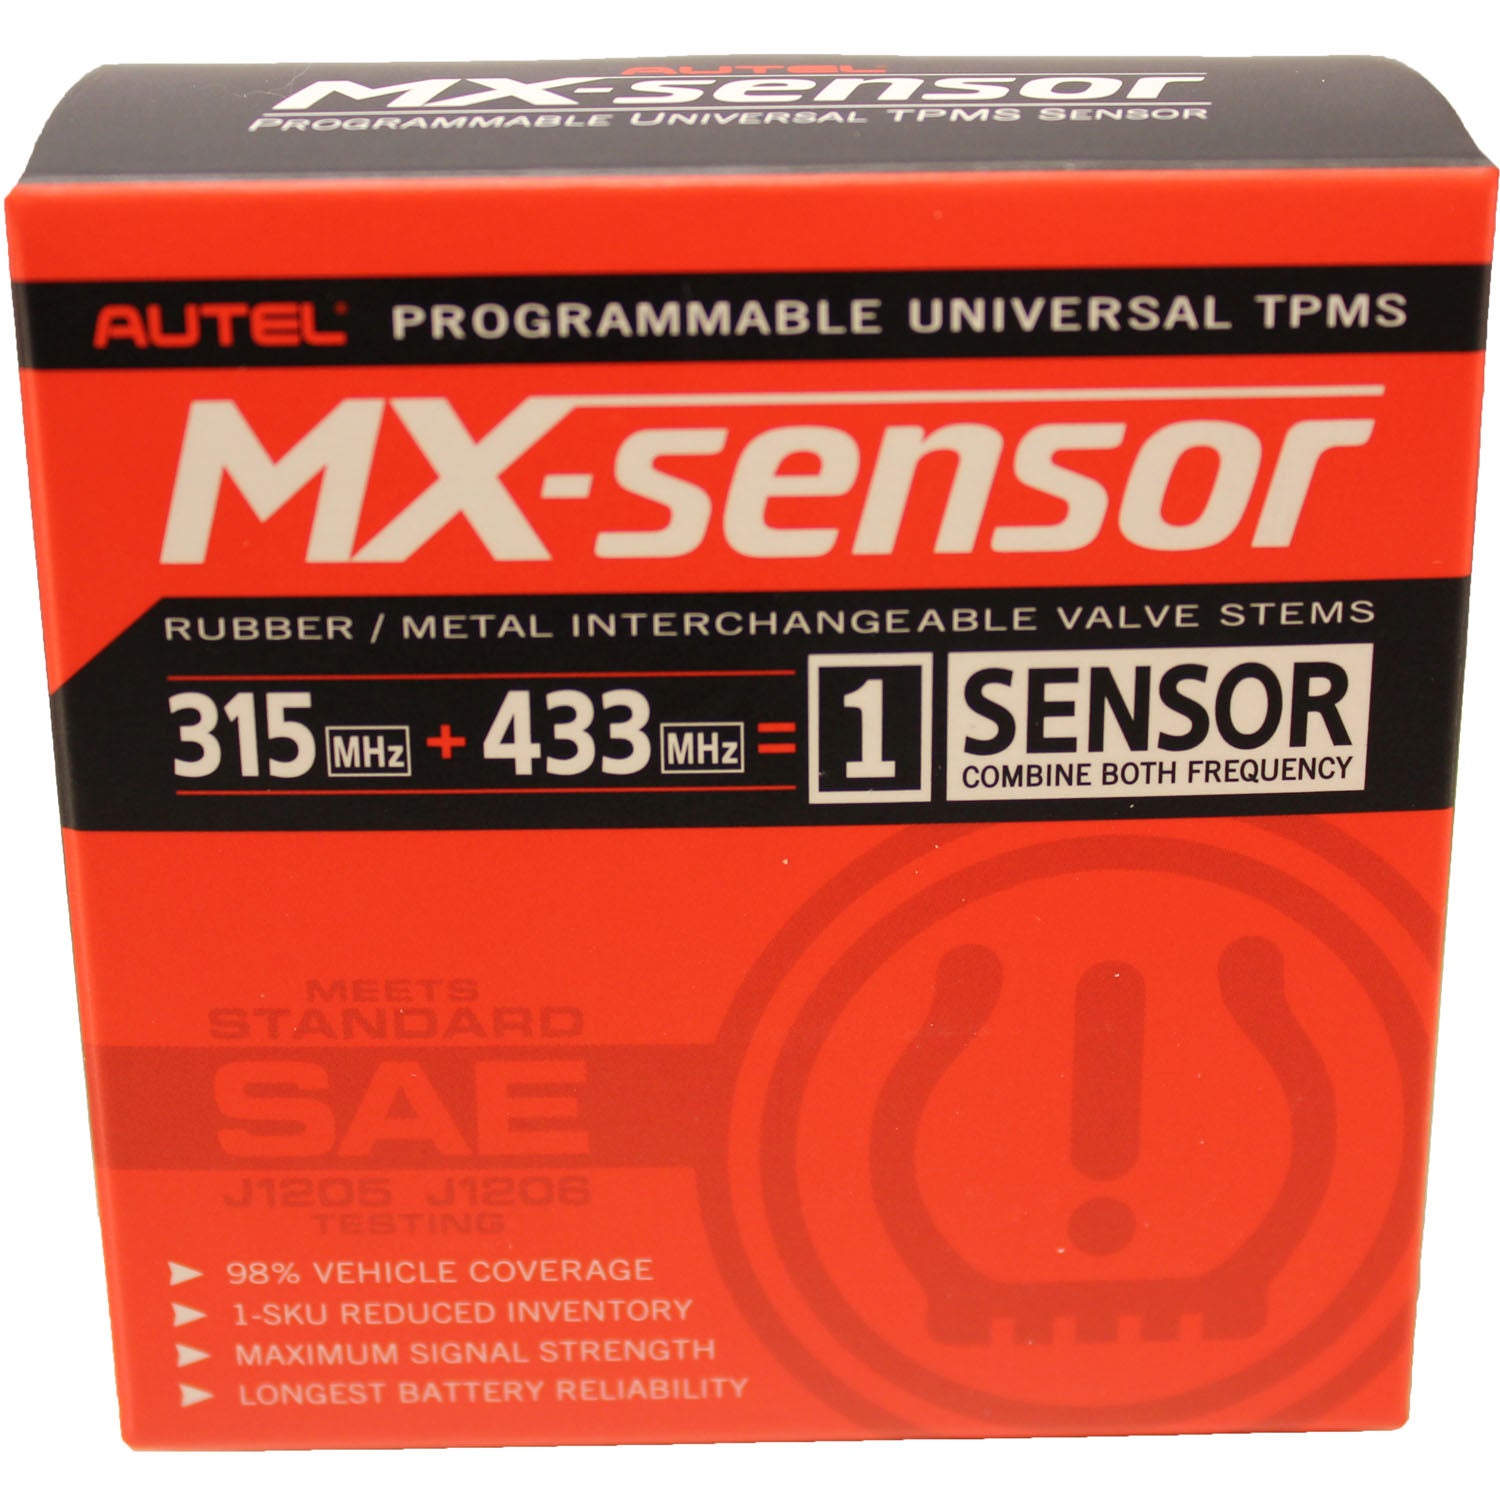 Autel MX-Sensor 315MHz and 433MHz TPMS Universal Programmable Sensor